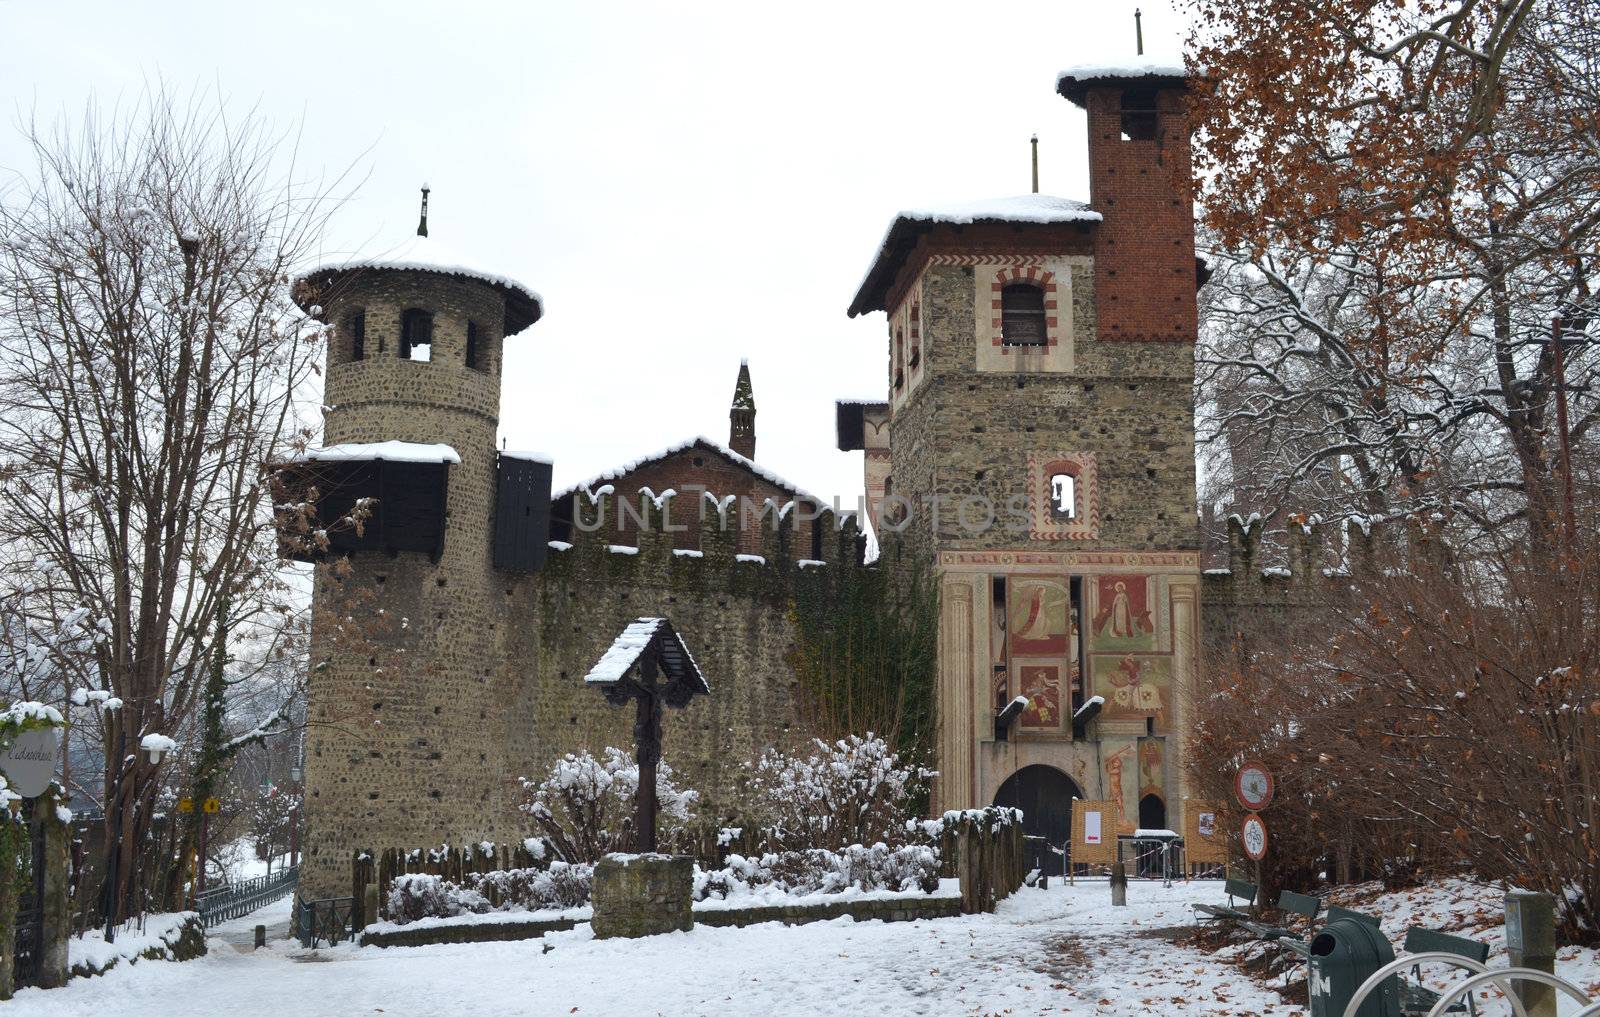 Turin, Italy: medieval castle in Parco del Valentino